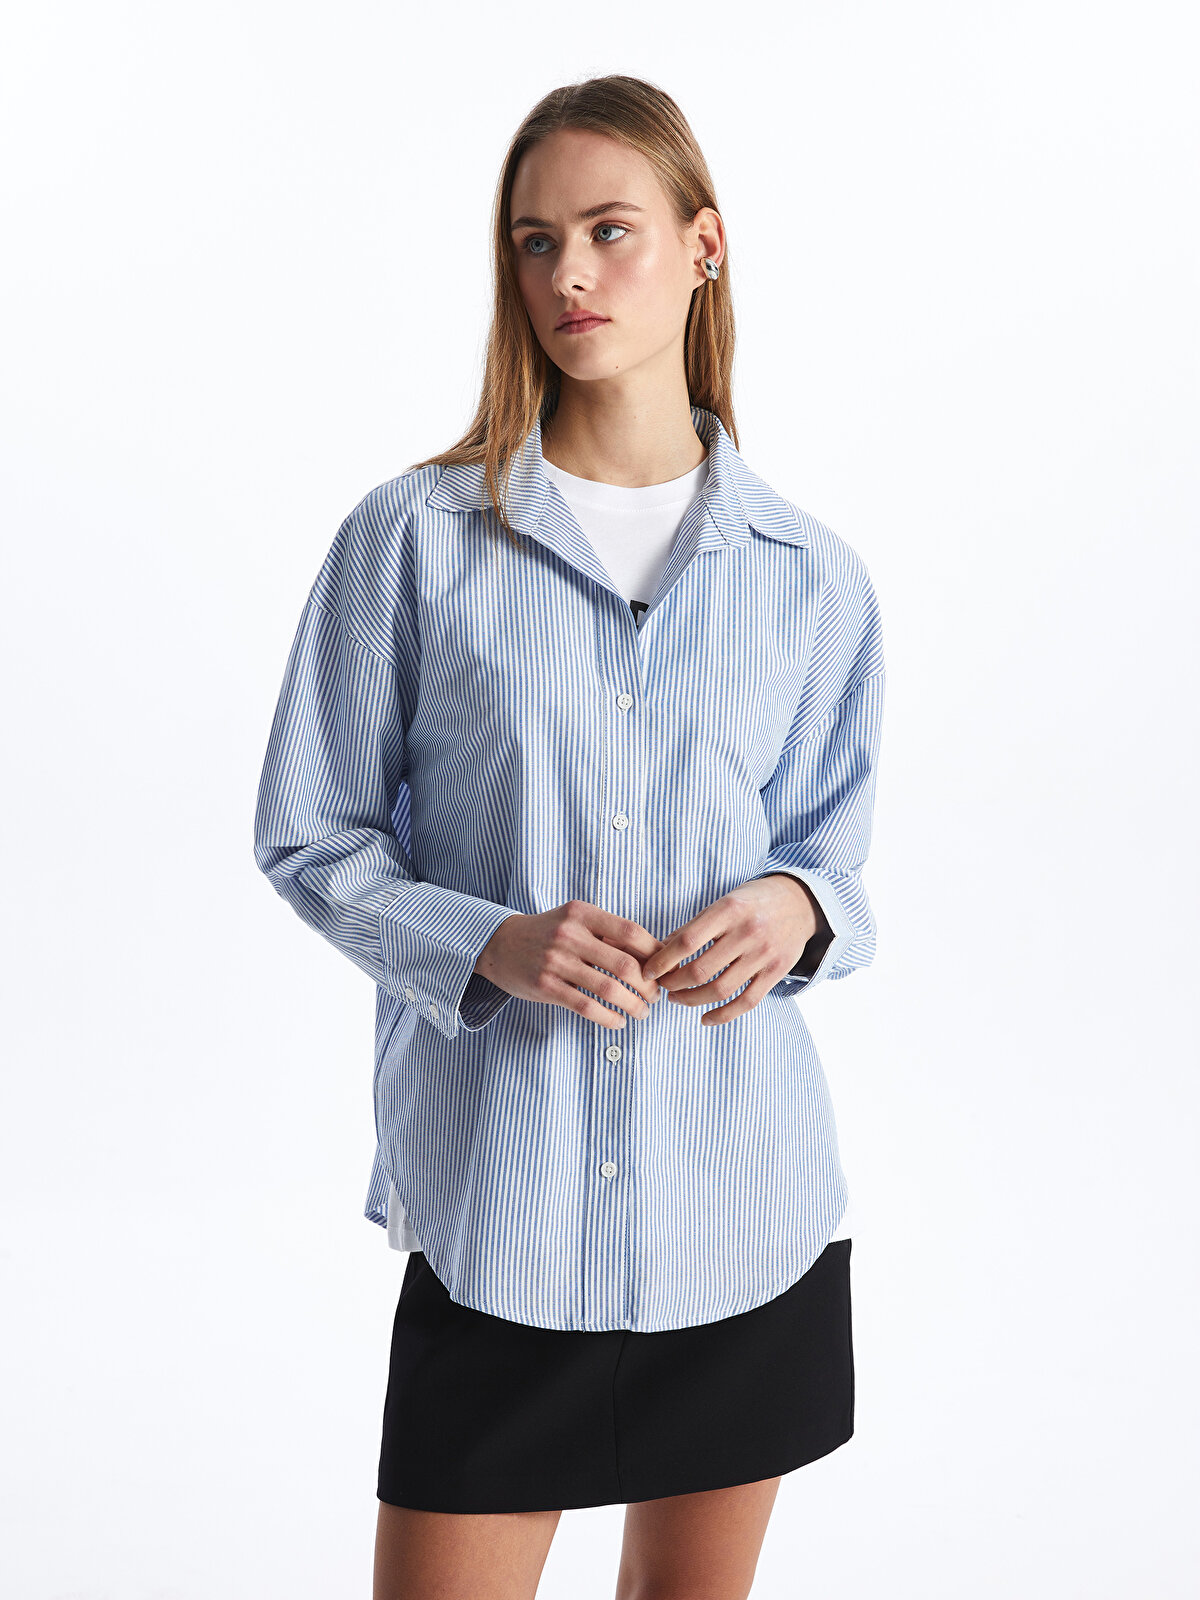 Striped Long Sleeve Oxford Women's Shirt -S42705Z8-LEN - S42705Z8 